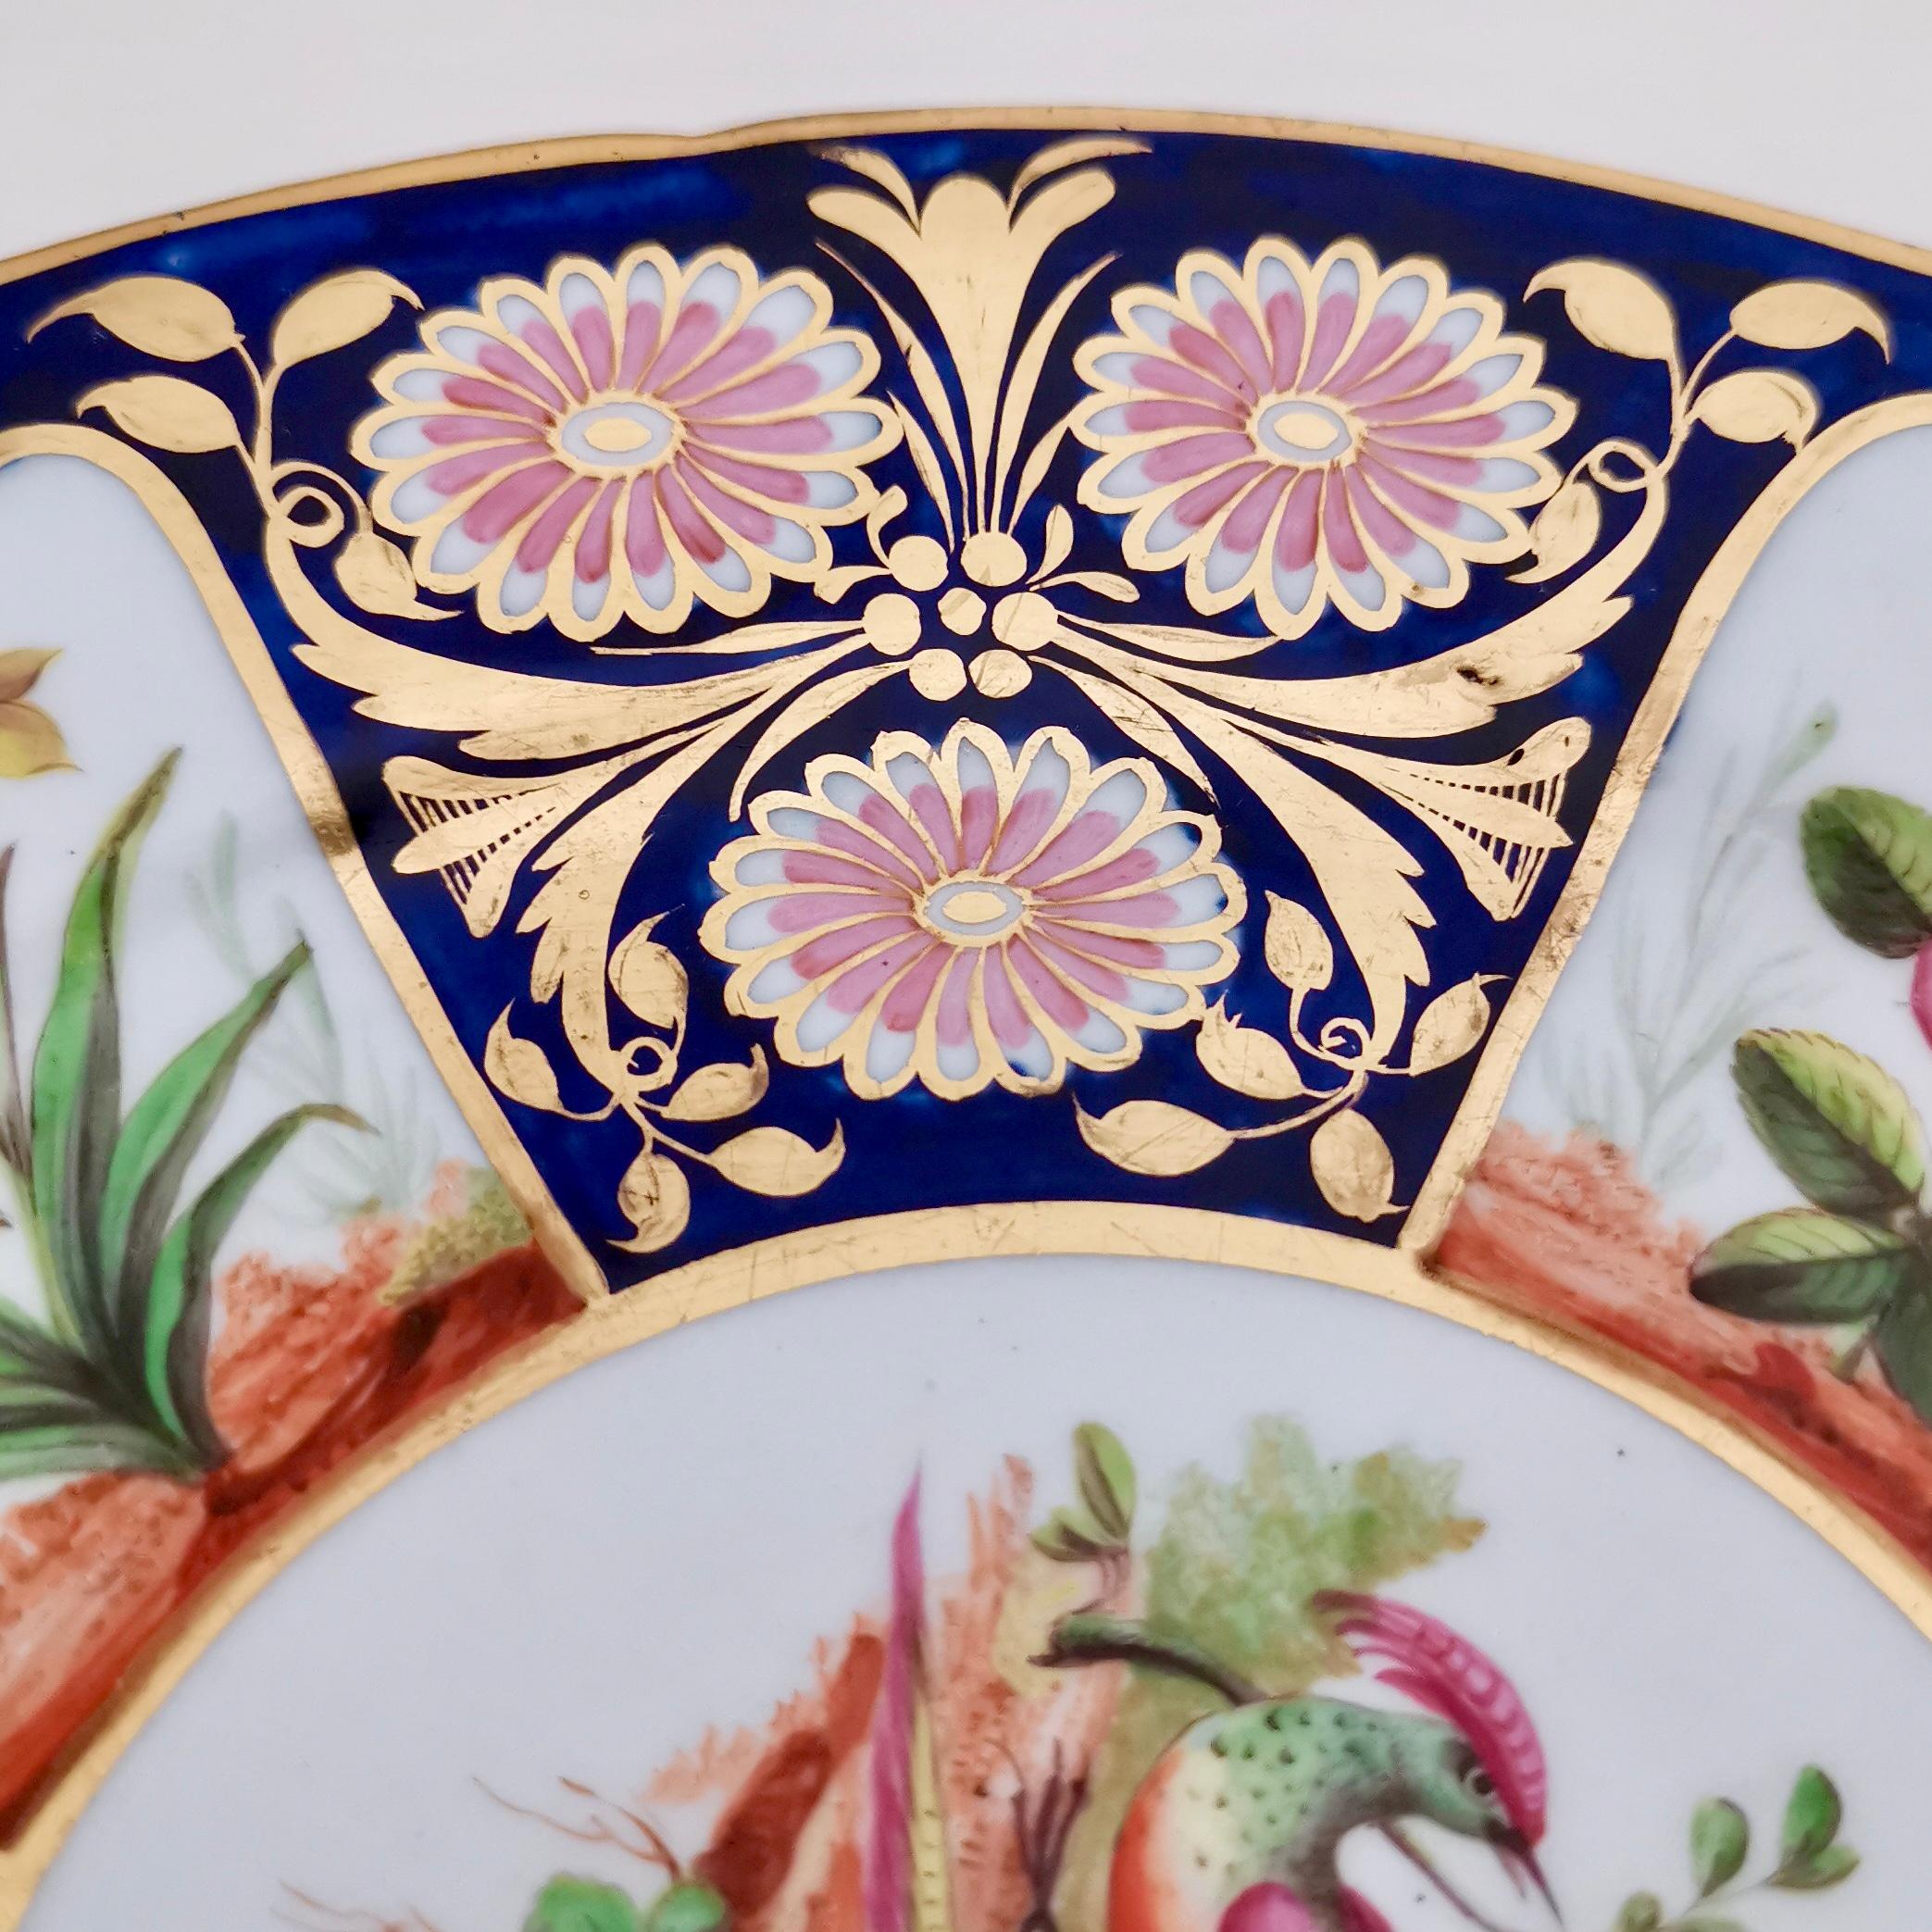 Porcelain John Rose Coalport Plate, Sèvres Style Birds and Flowers, circa 1815